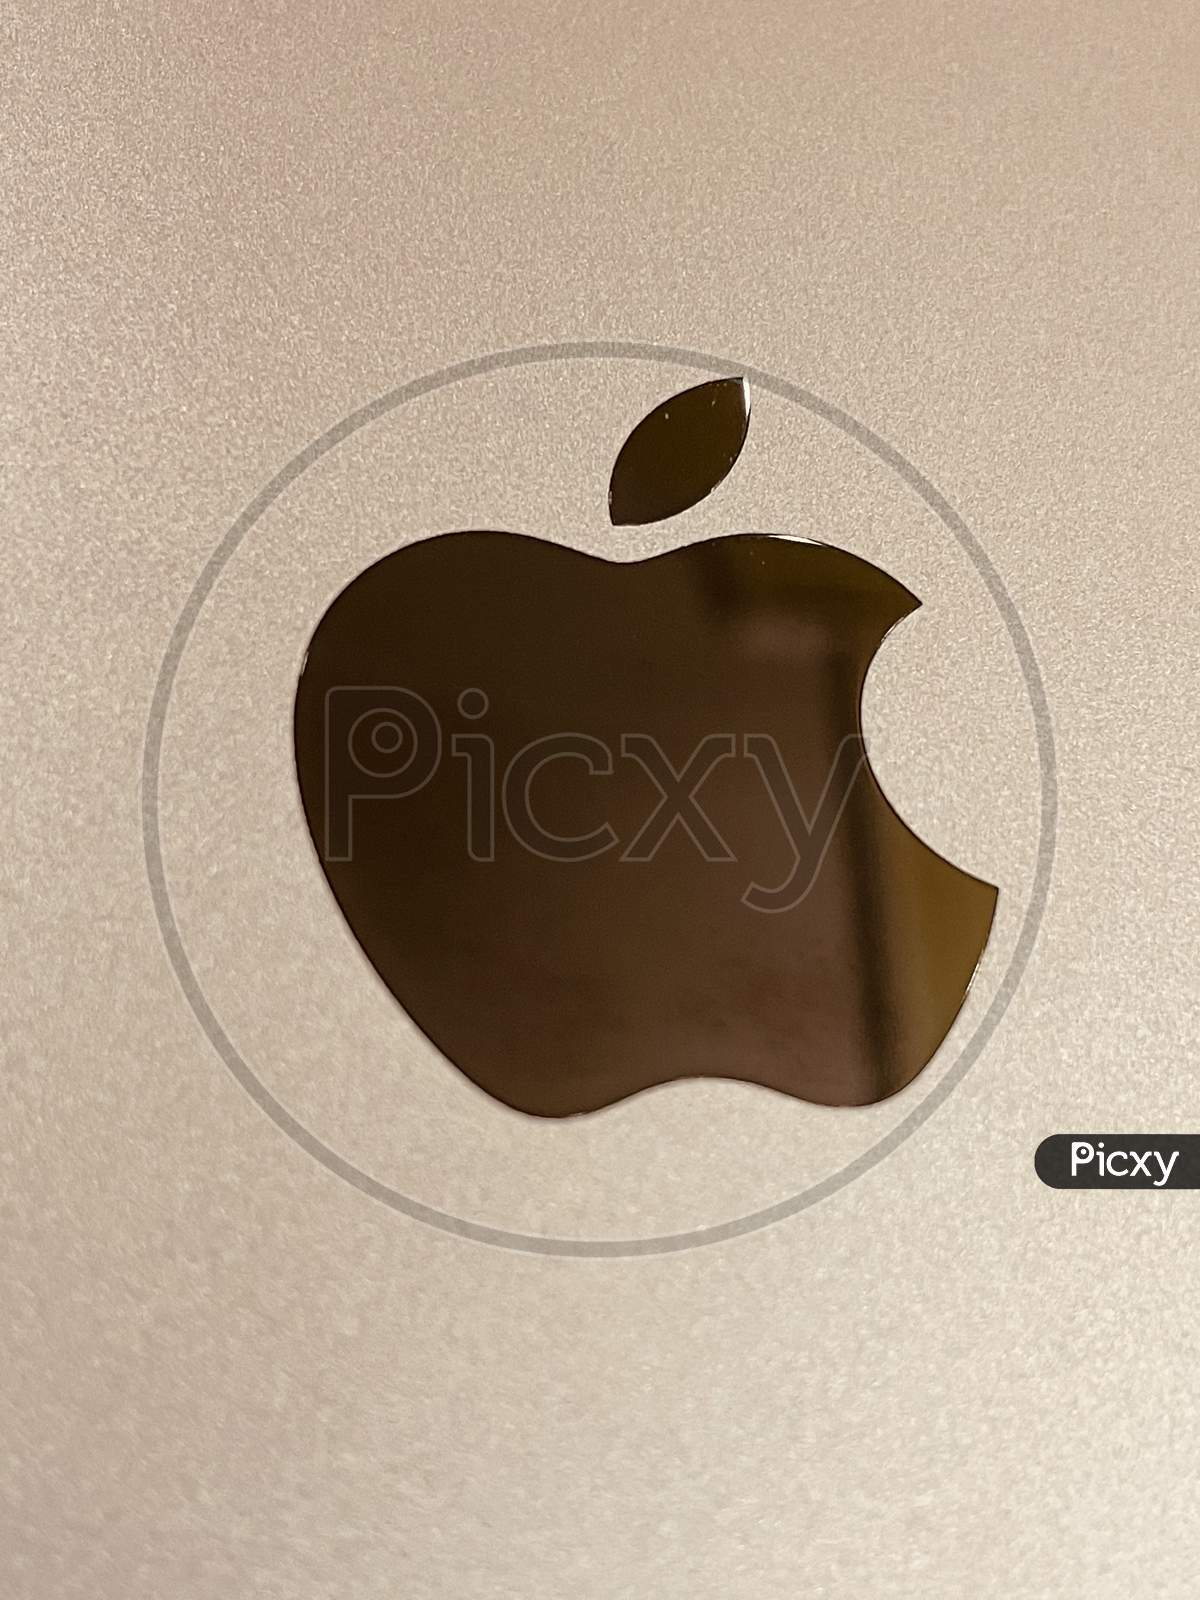 Cool apple logo